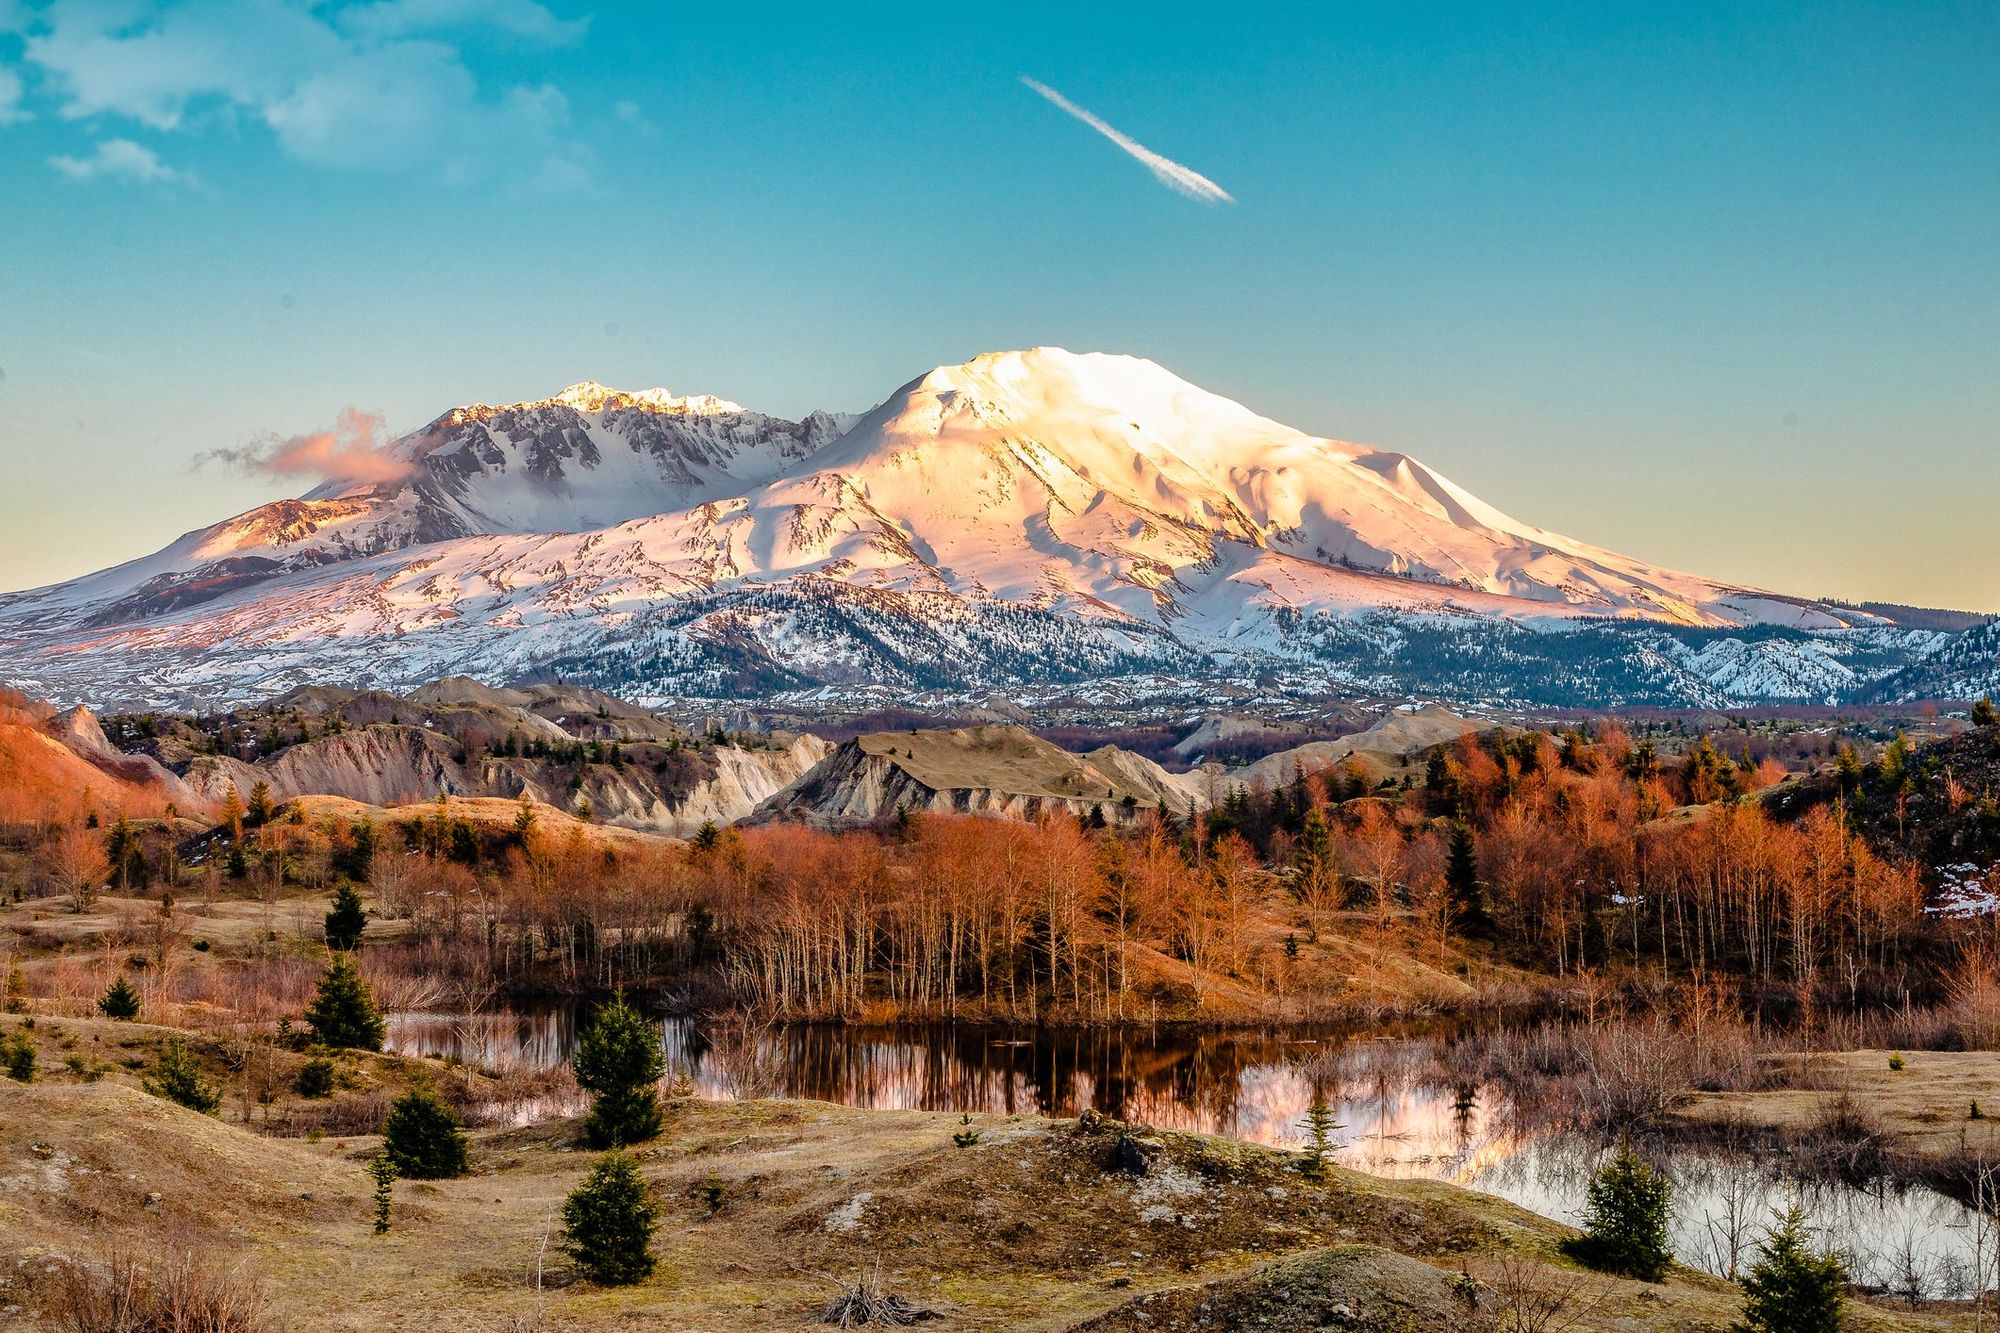 Mount Saint Helen's in Washington on a winter day.